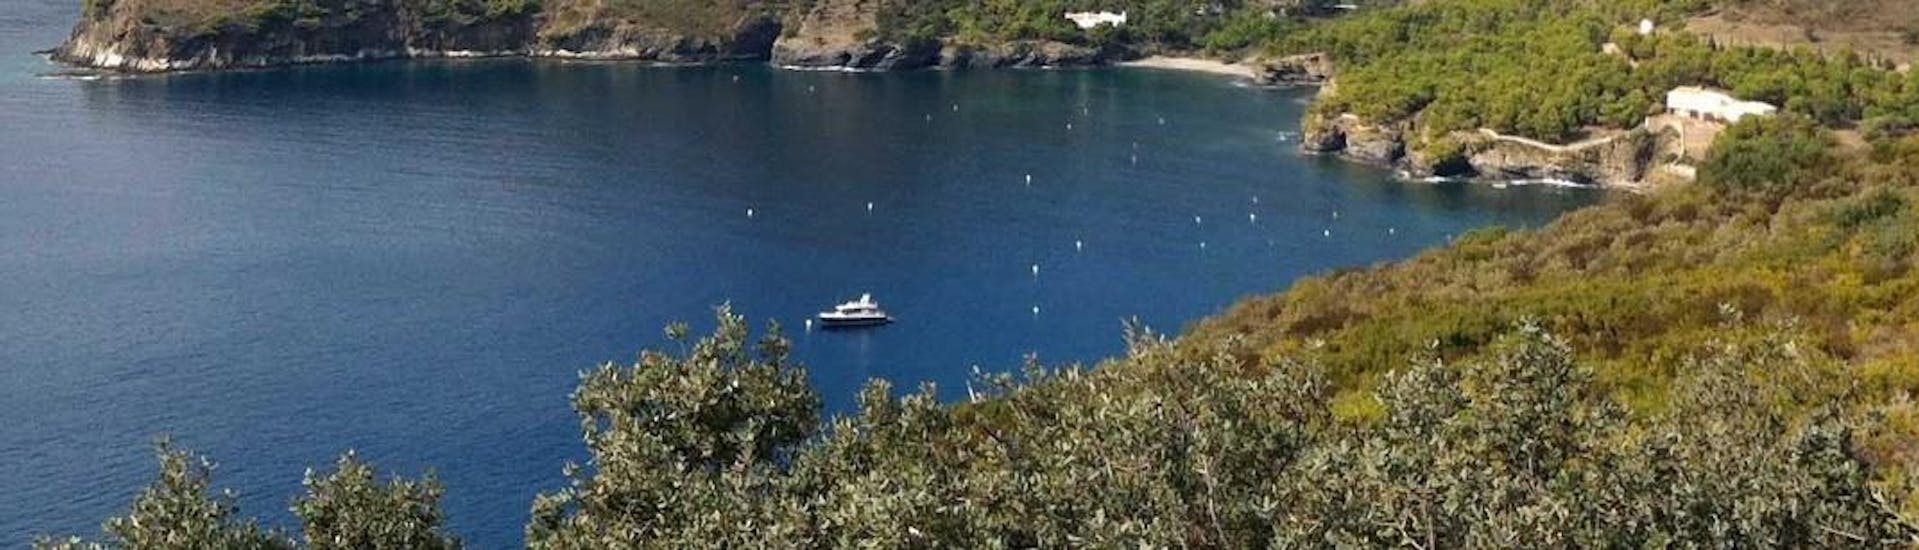 Katamaranfahrt zum Cap Norfeu und Cadaqués mit Schnorcheln mit Magic Catamarans Mallorca